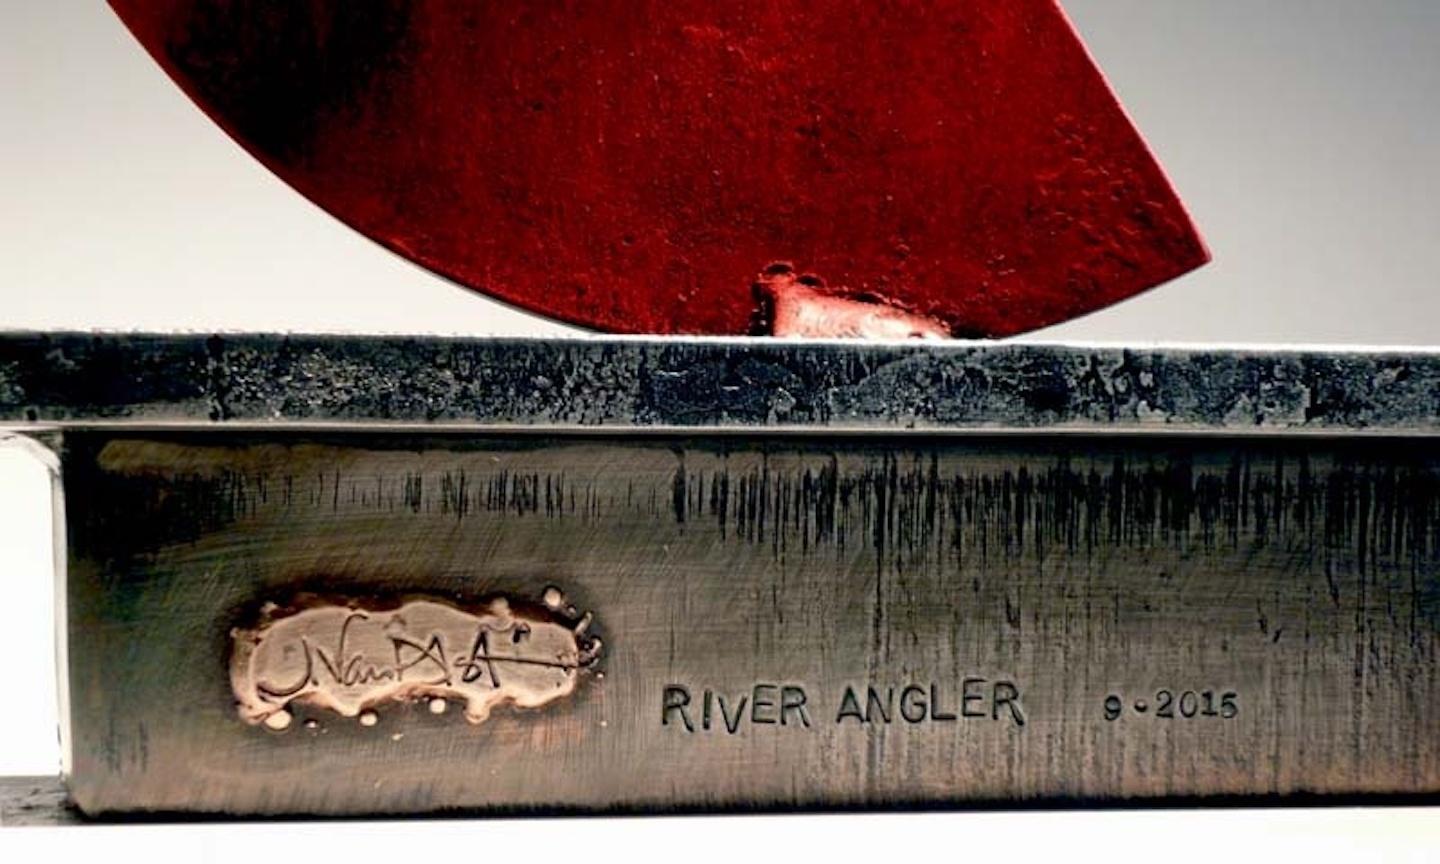 River Angler - Abstract Geometric Sculpture by John Van Alstine